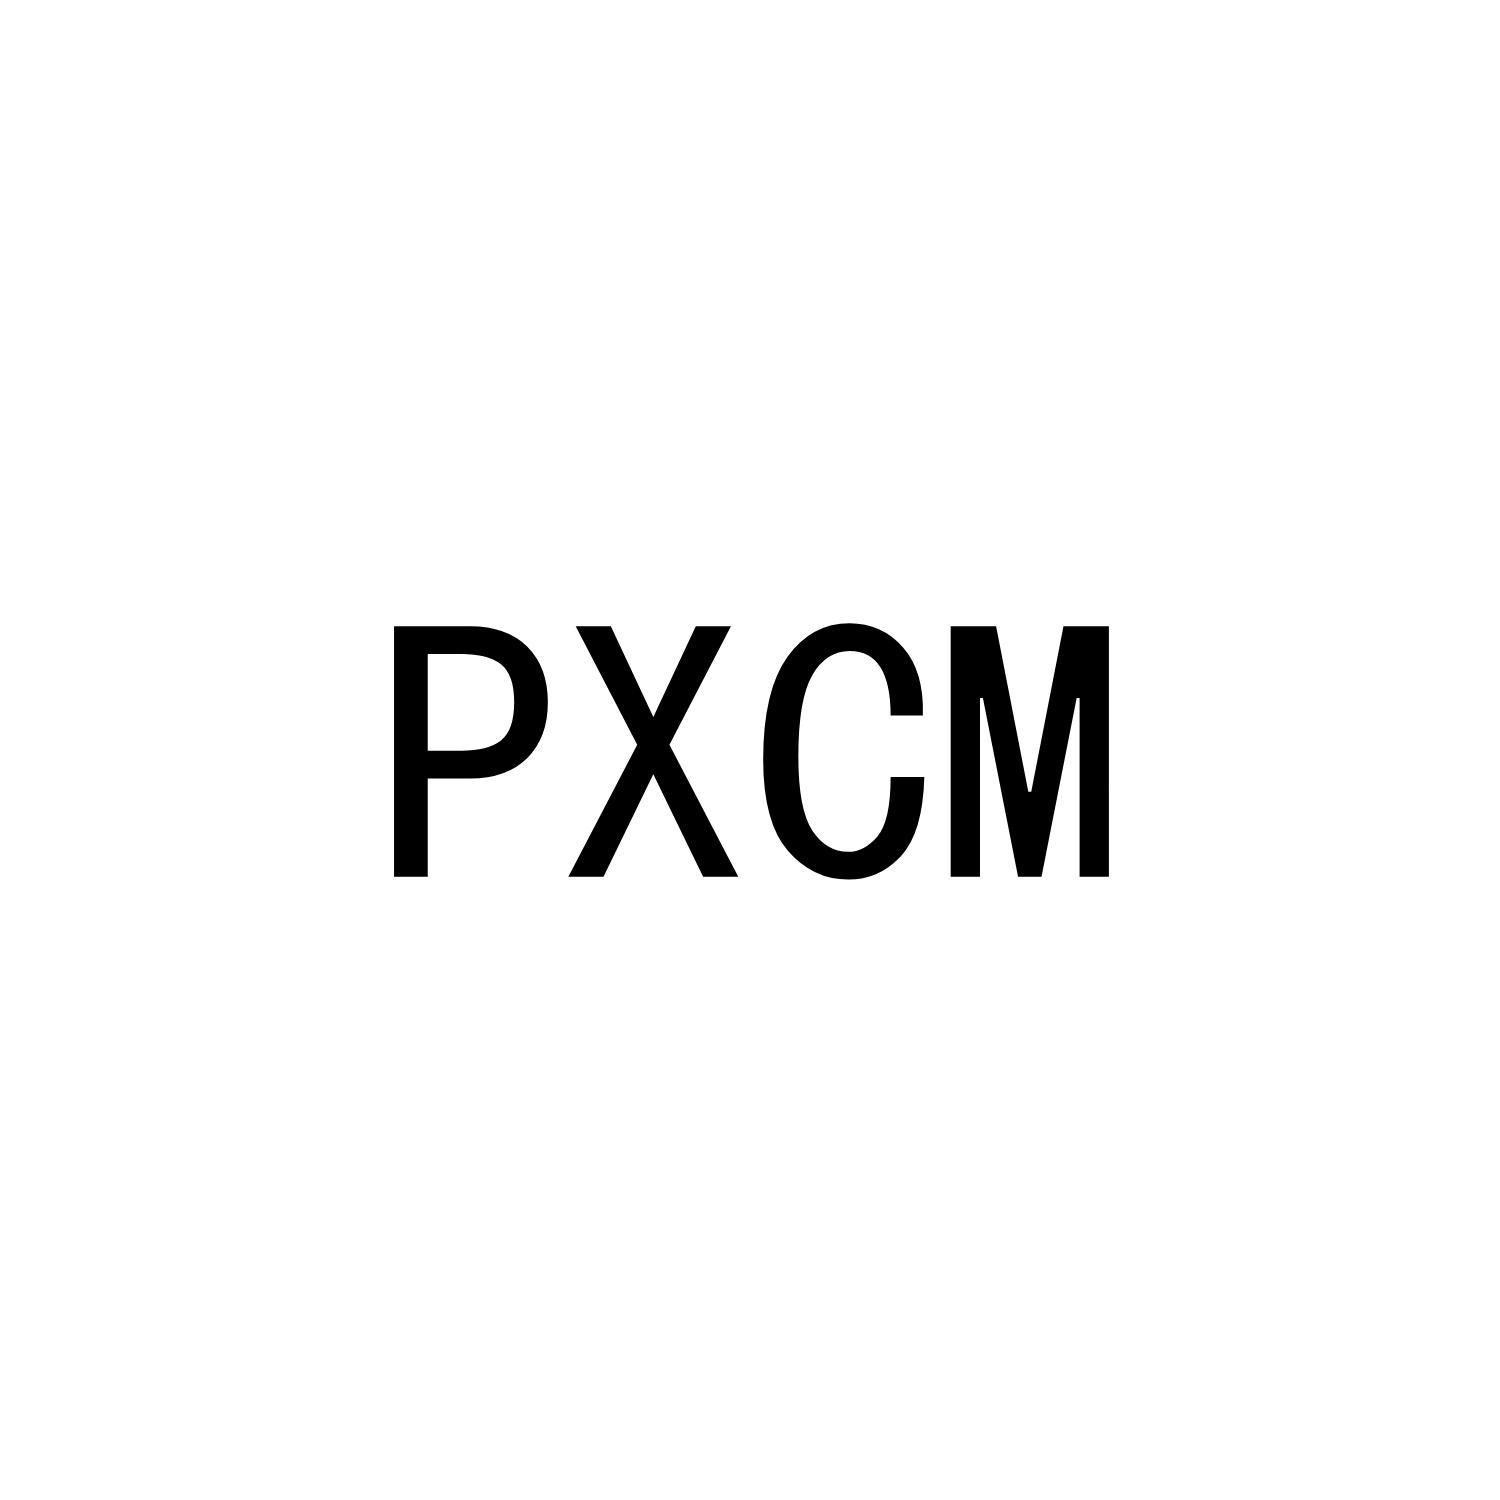 PXCM